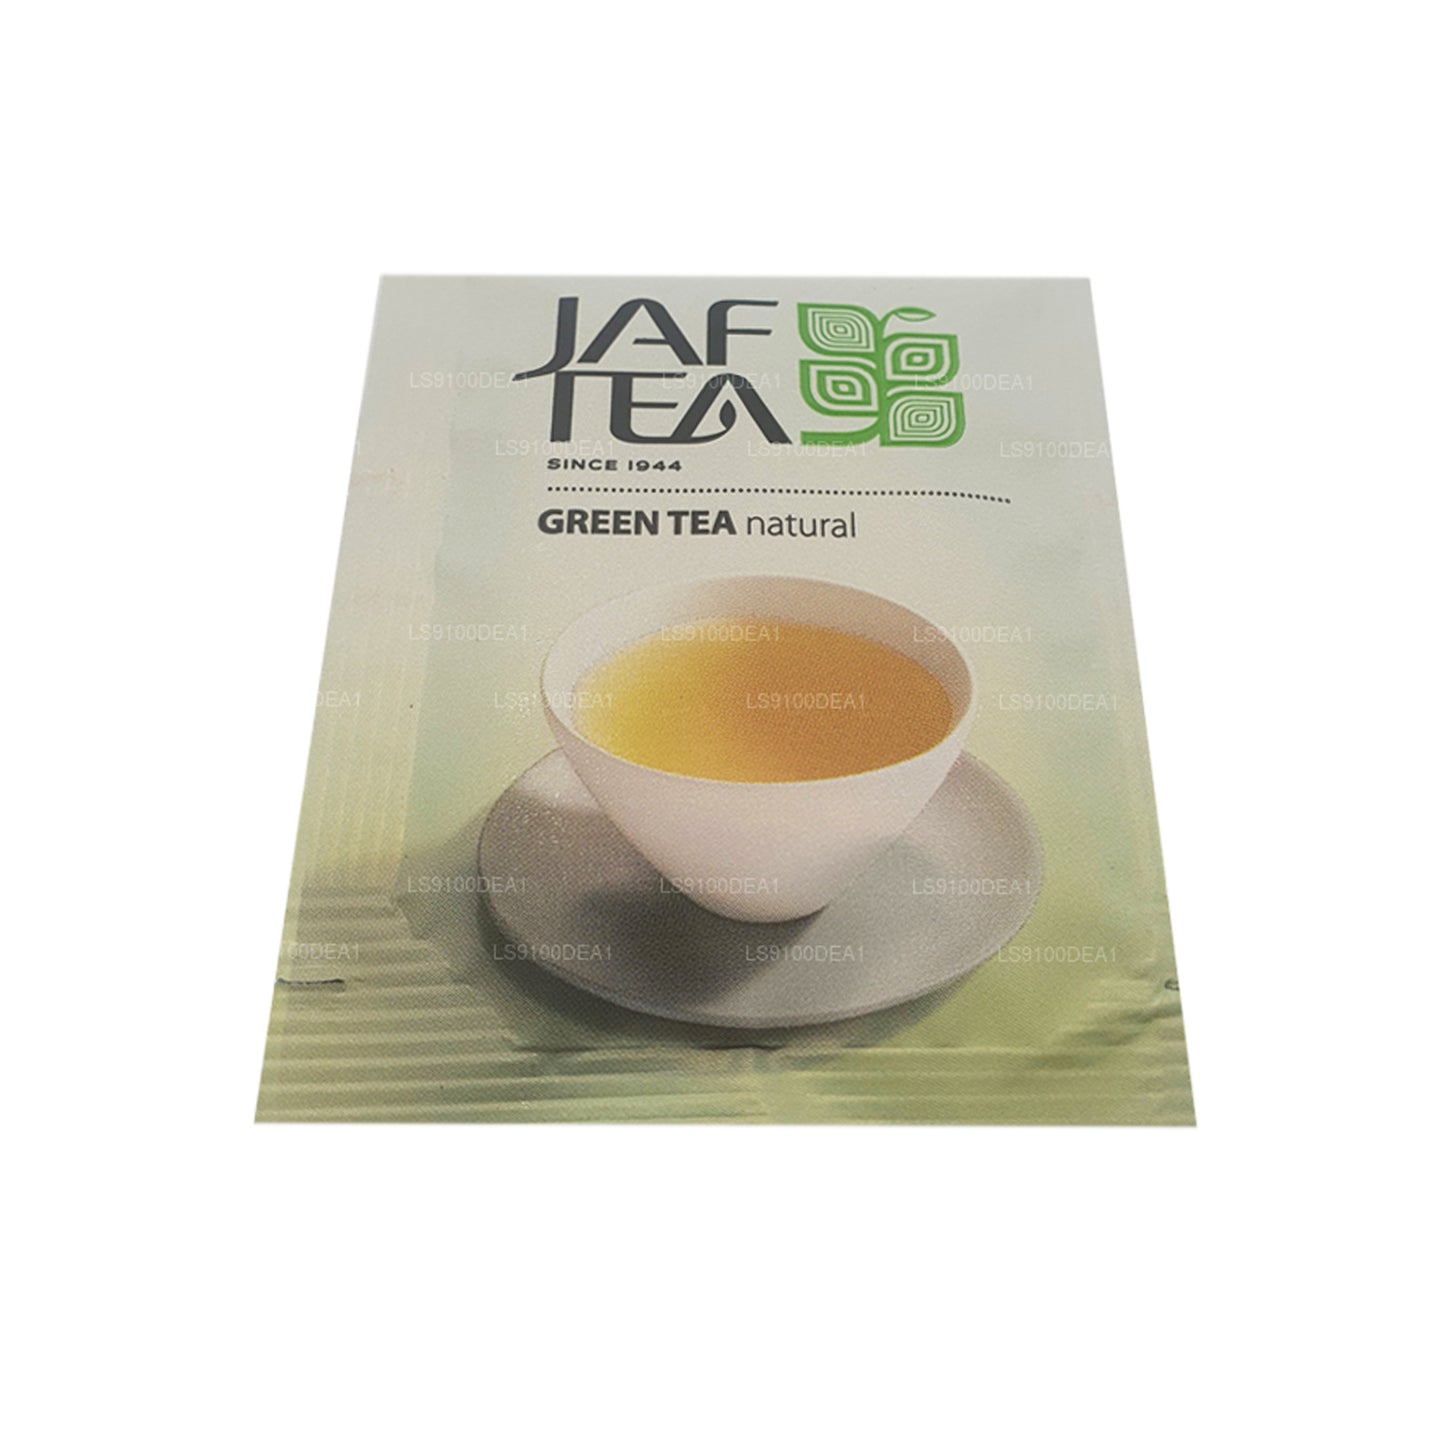 Jaf Tea Pure Green 系列 (160g) 80 个茶包